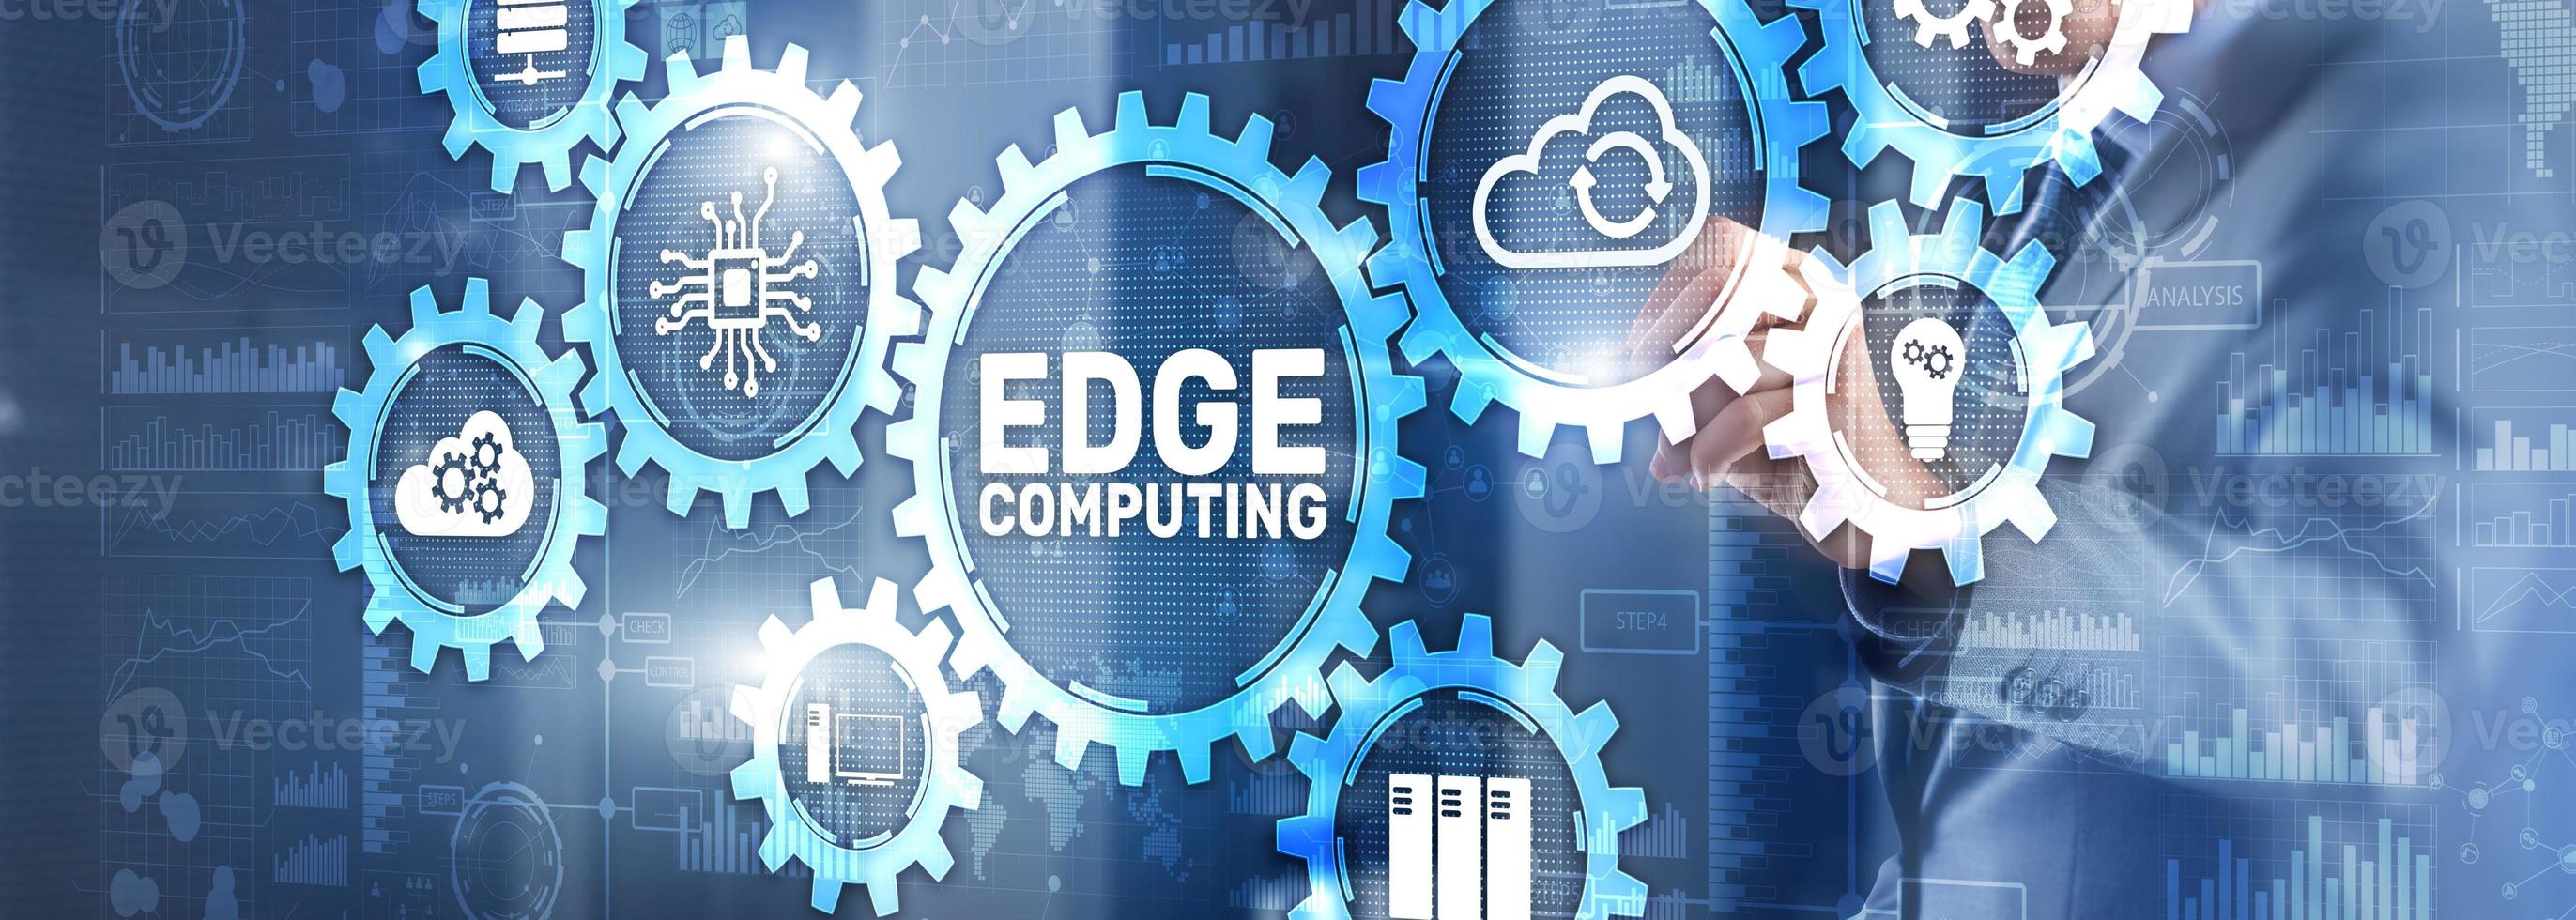 edge computing technologie internet concept. gemengde media foto